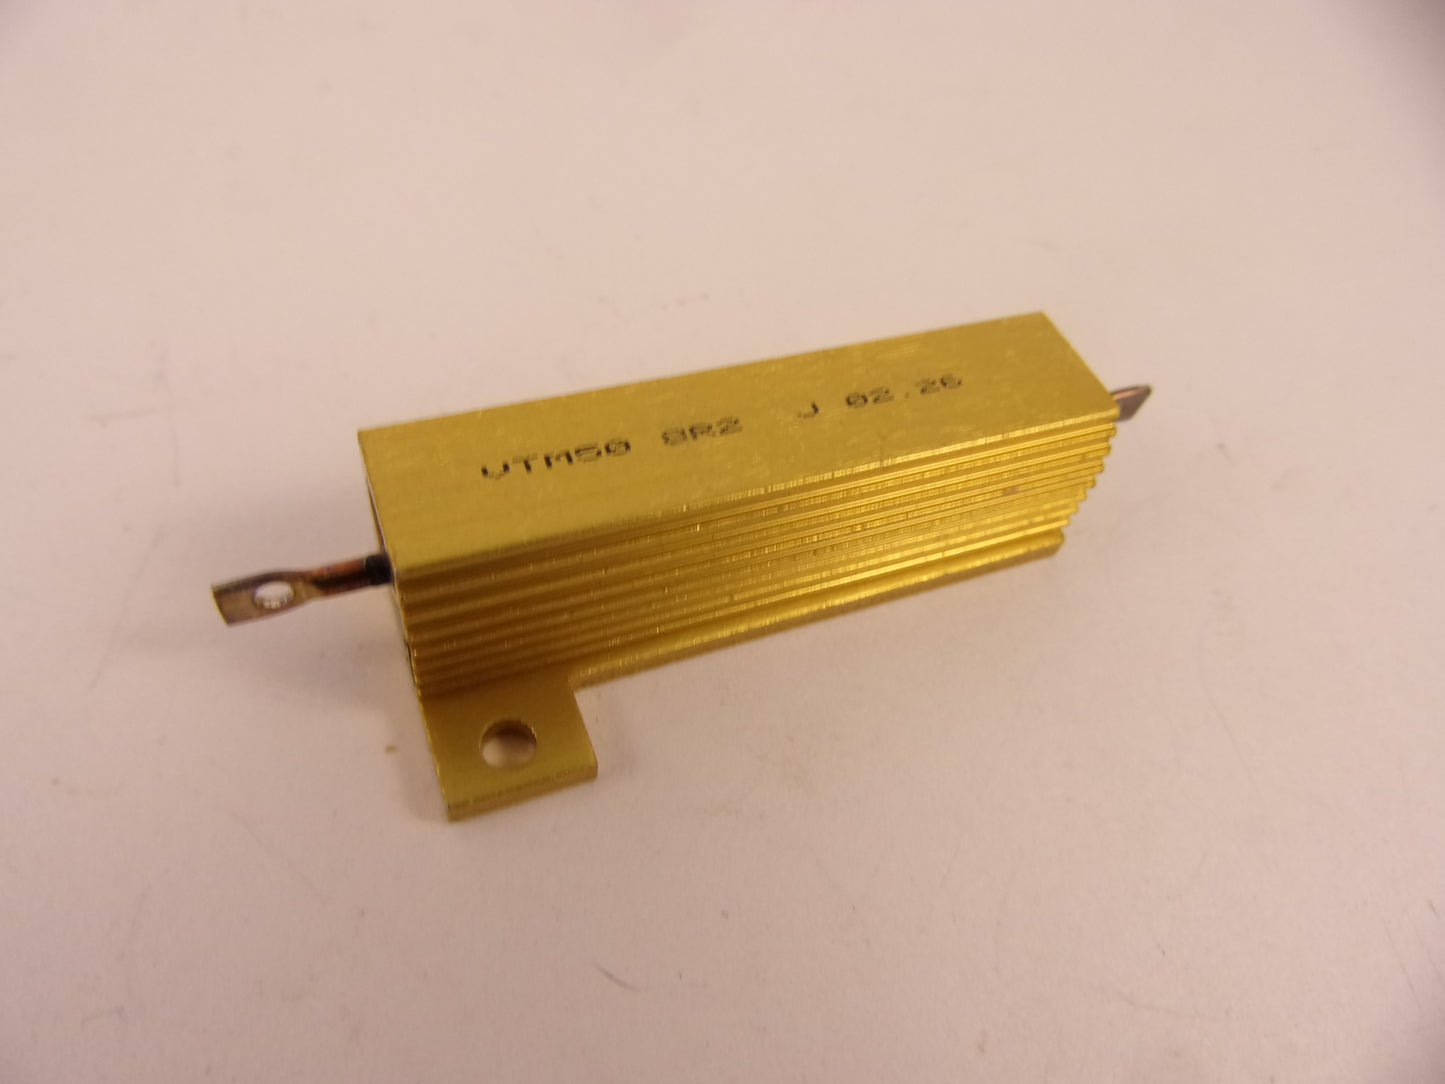 Vitramon resistor 50 watt 8R2 8.2 Ohm metal aluminium case clad VTM8R2